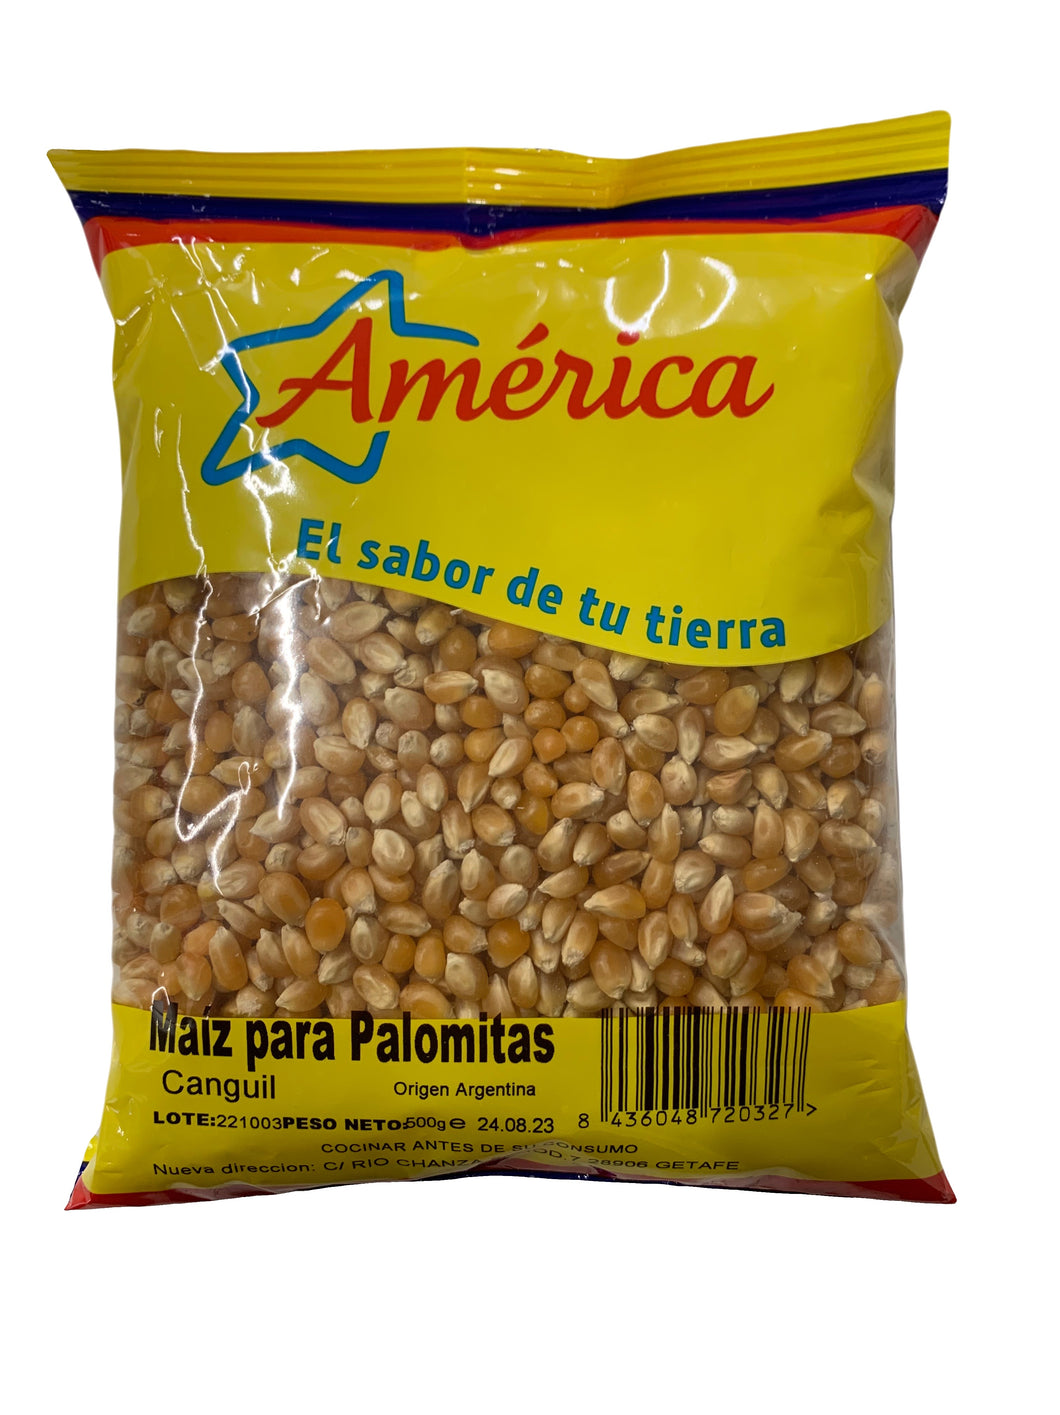 America Popcorn Maize - Maiz Canguil 500g